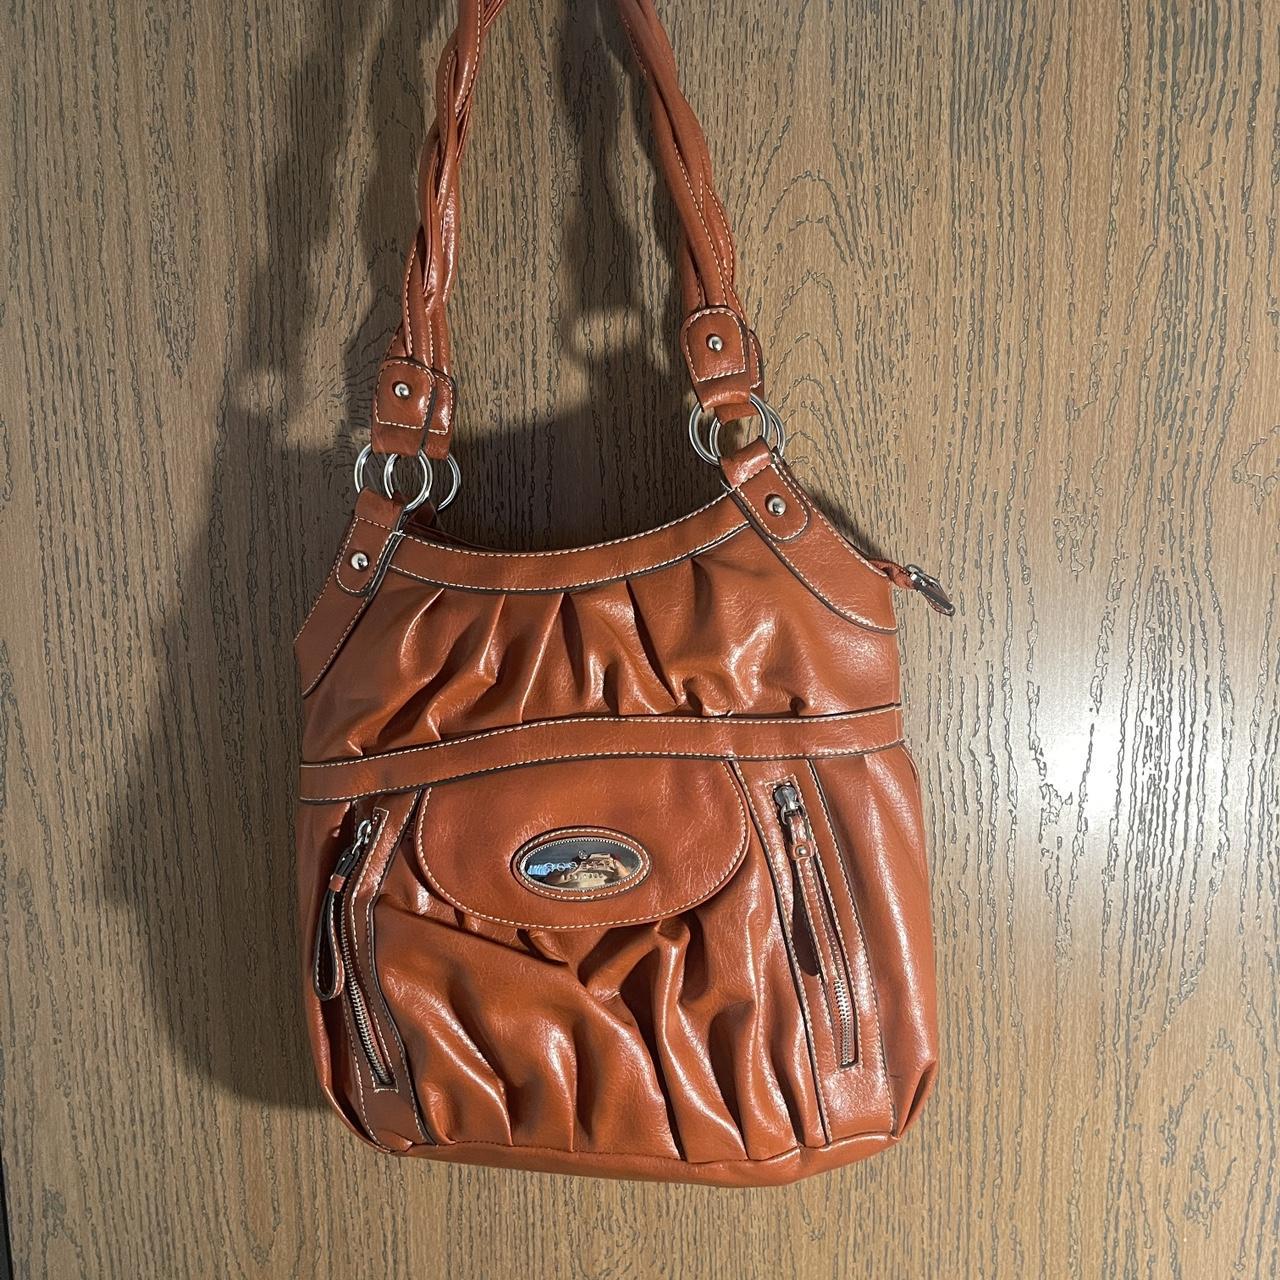 Willow Camera' shoulder bag Coach - IetpShops Turkey - Coach 1941 Ellie  Mixed Leather Rivets Crossbody Bag